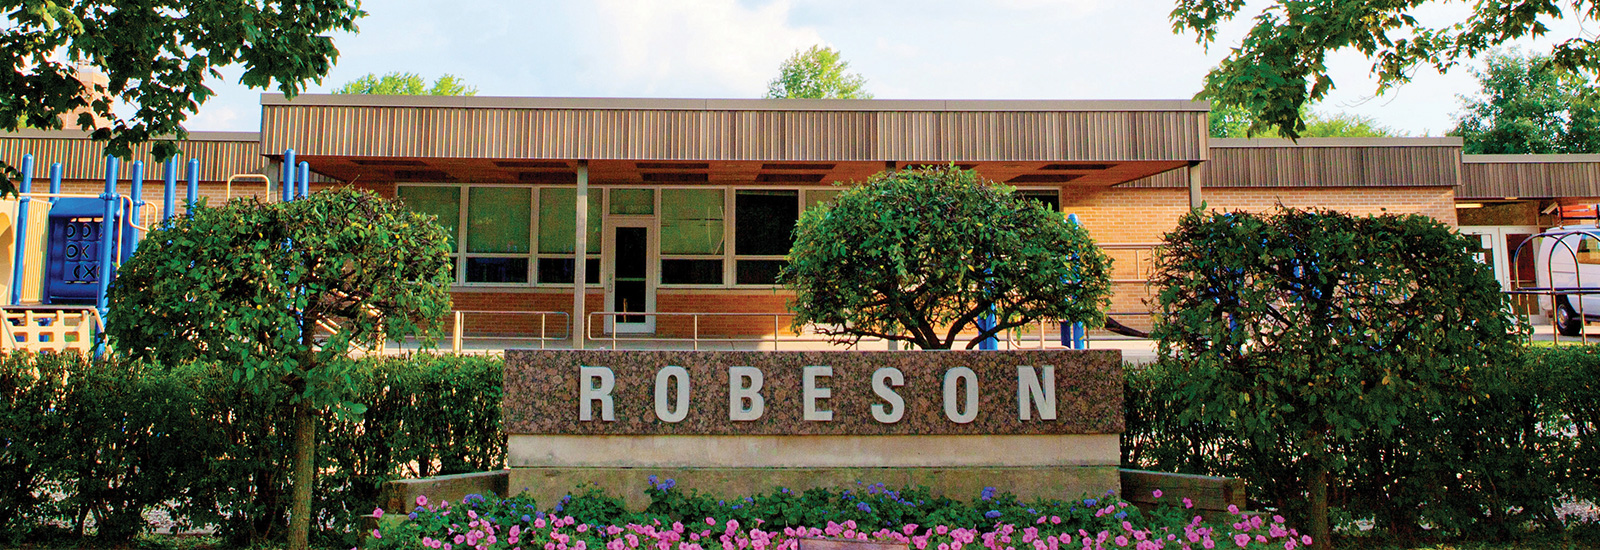 robeson elementary school